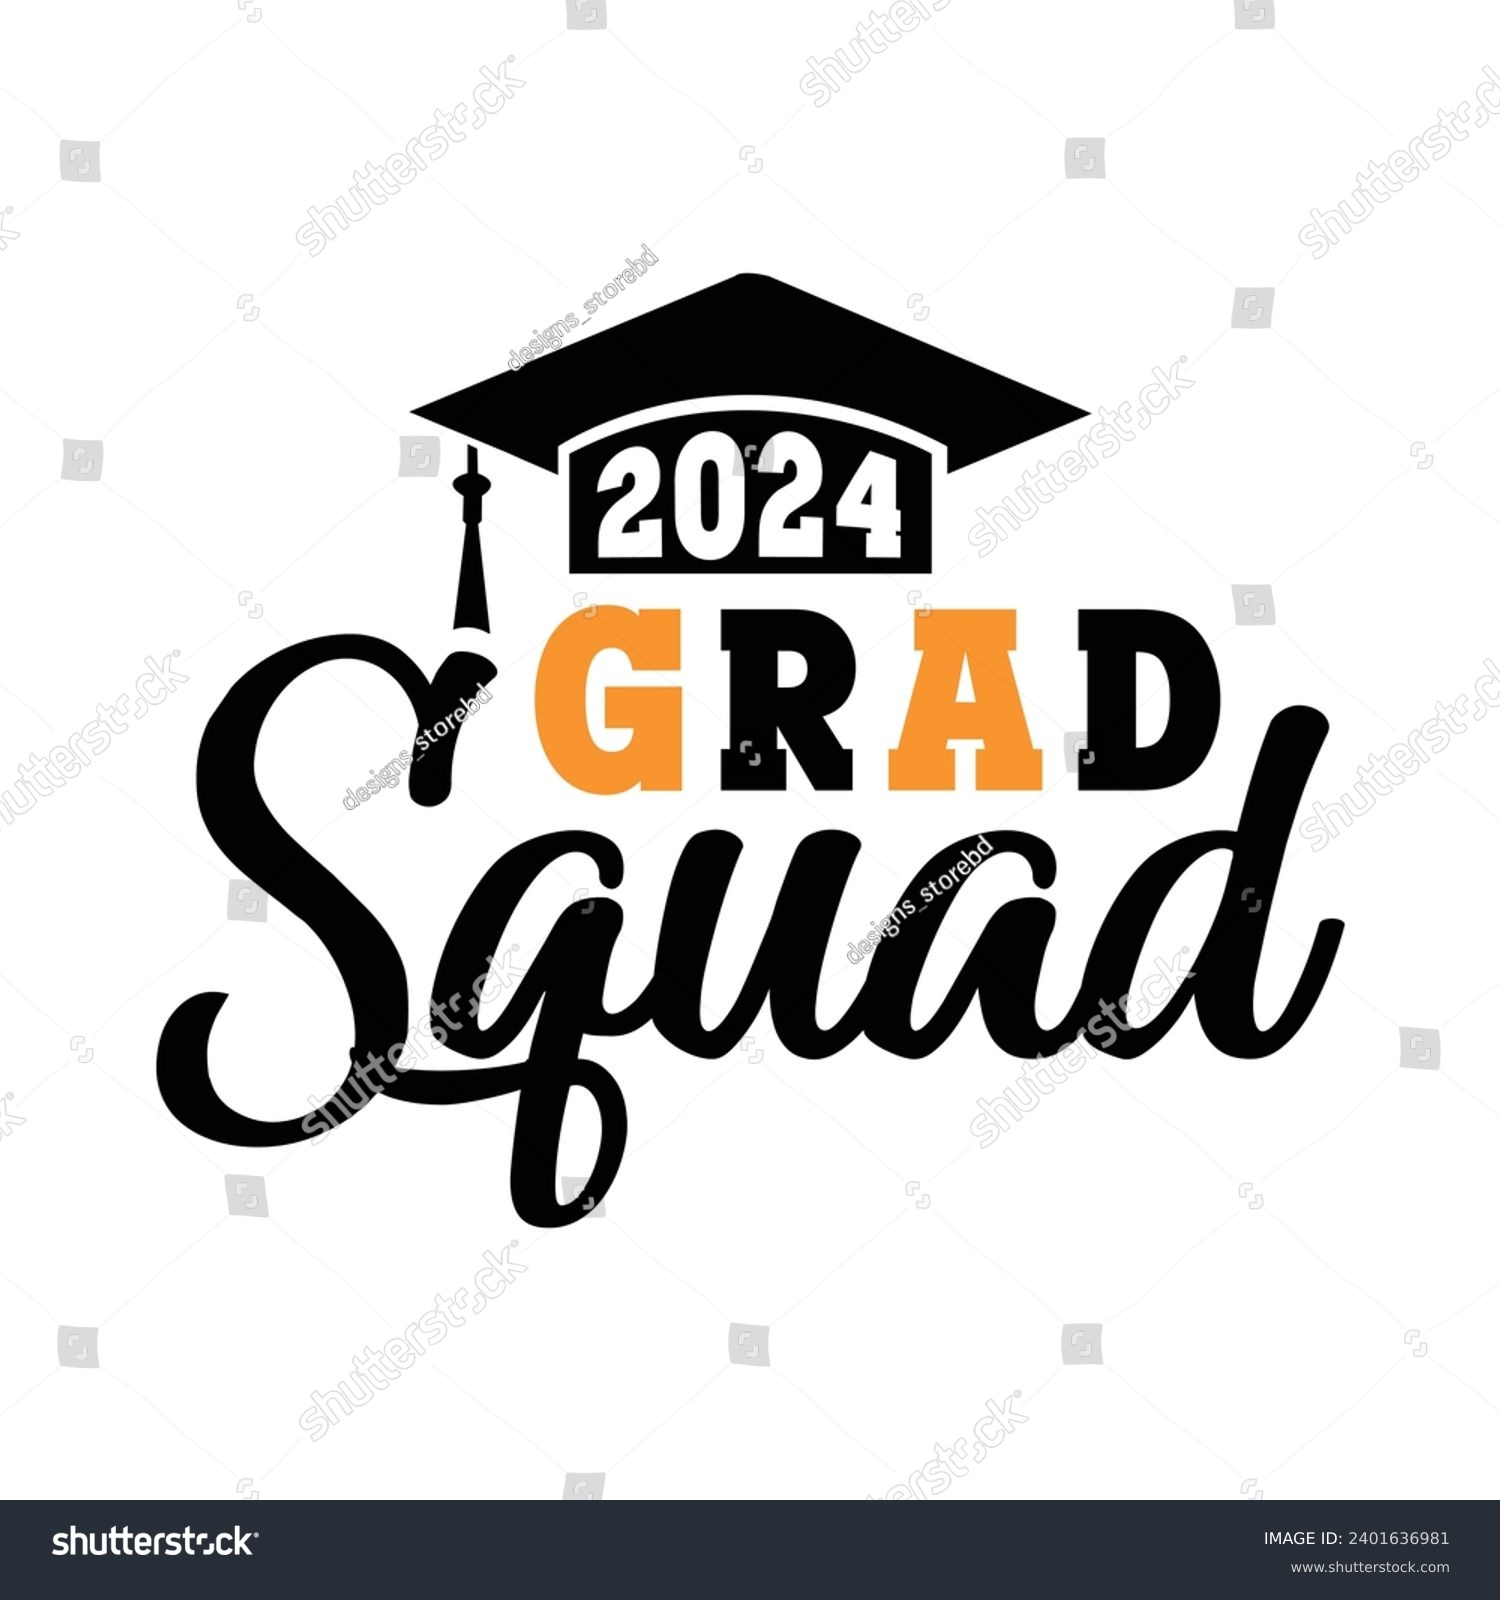 SVG of 2024 grad squad,Graduation quotes,Class of 2024 Graduation design Bundle,silhouette,Graduation cap,T shirt Calligraphy phrase for Christmas,Hand drawn lettering for Xmas greetings,Graduation 2024 svg